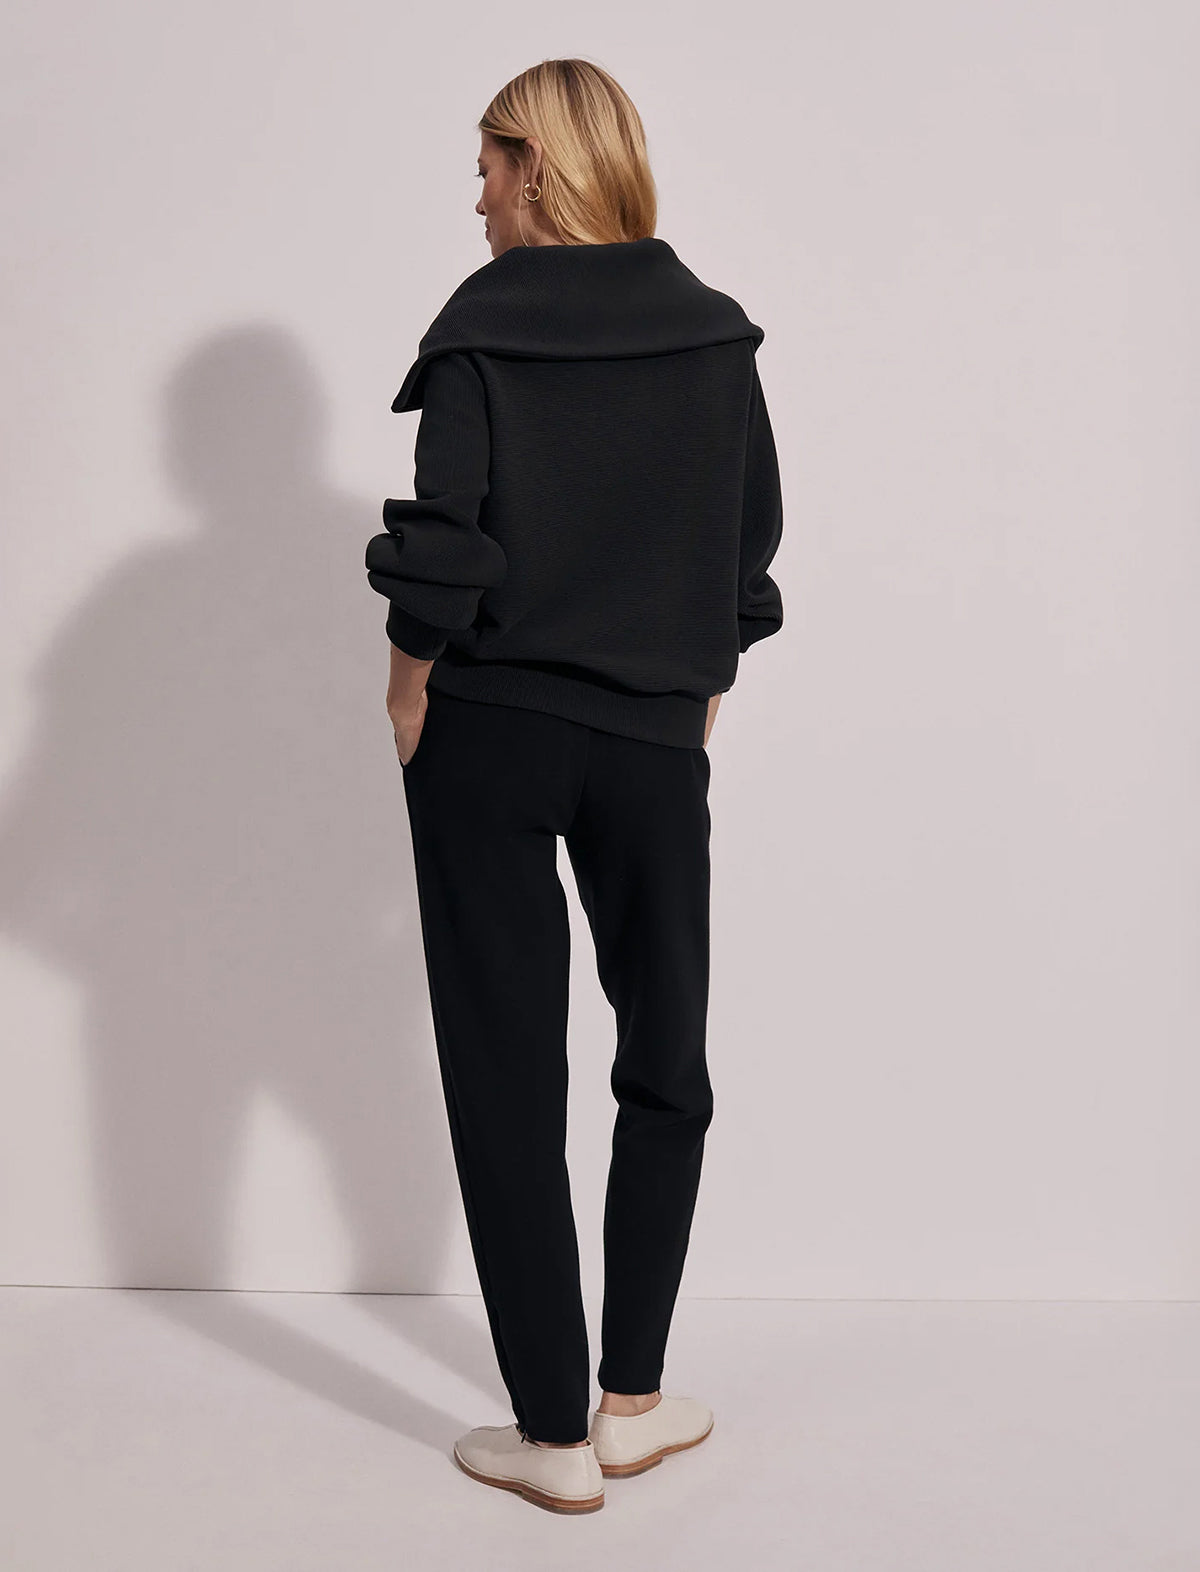 VARLEY Vine Half-Zip Pullover In Black